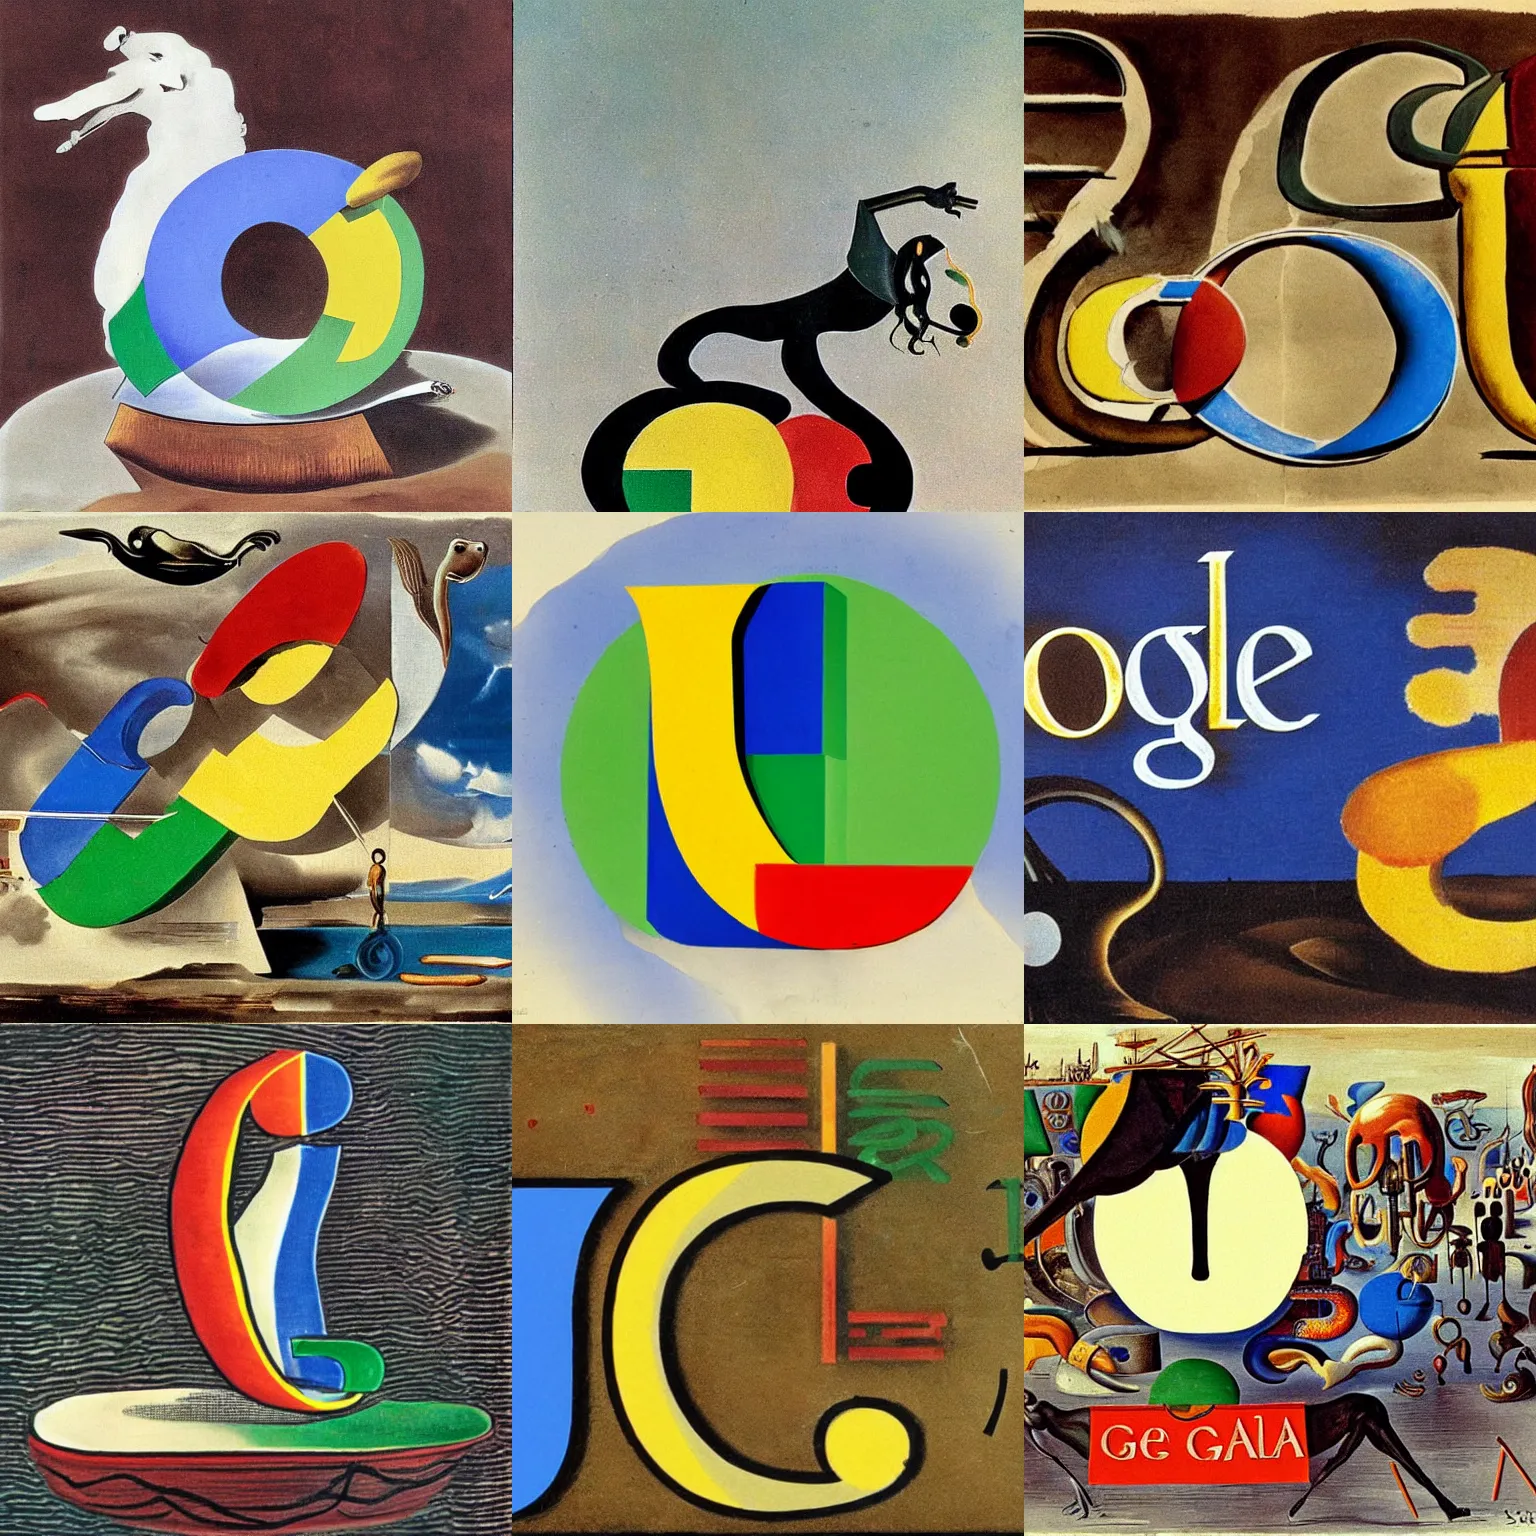 Prompt: google logo by salvador dali